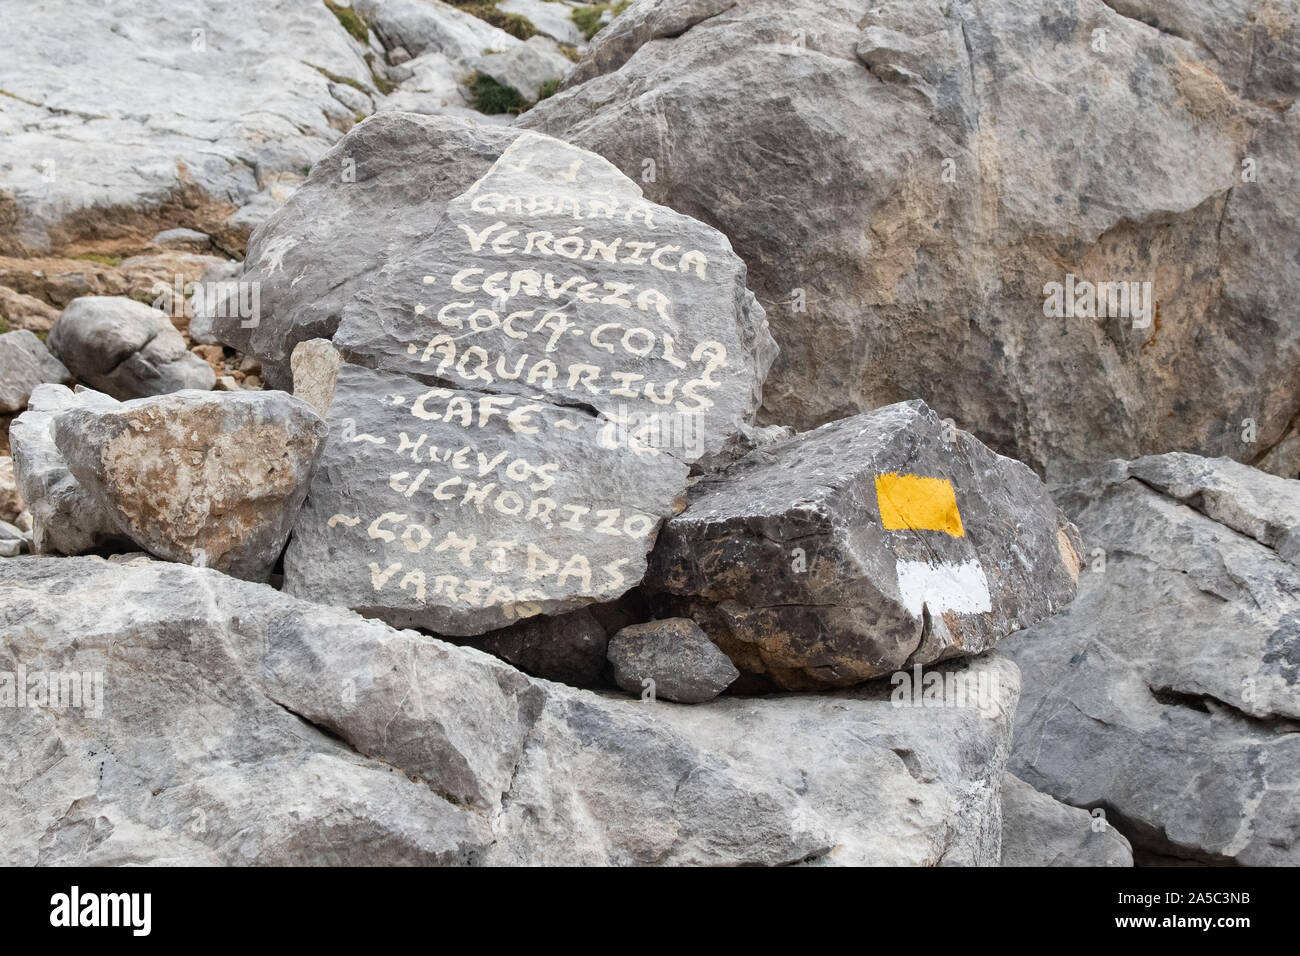 menu for Cabana Veronica mountain refuge painted onto a rock next to footpath marker, Picos de Europe, Spain, Europe Stock Photo